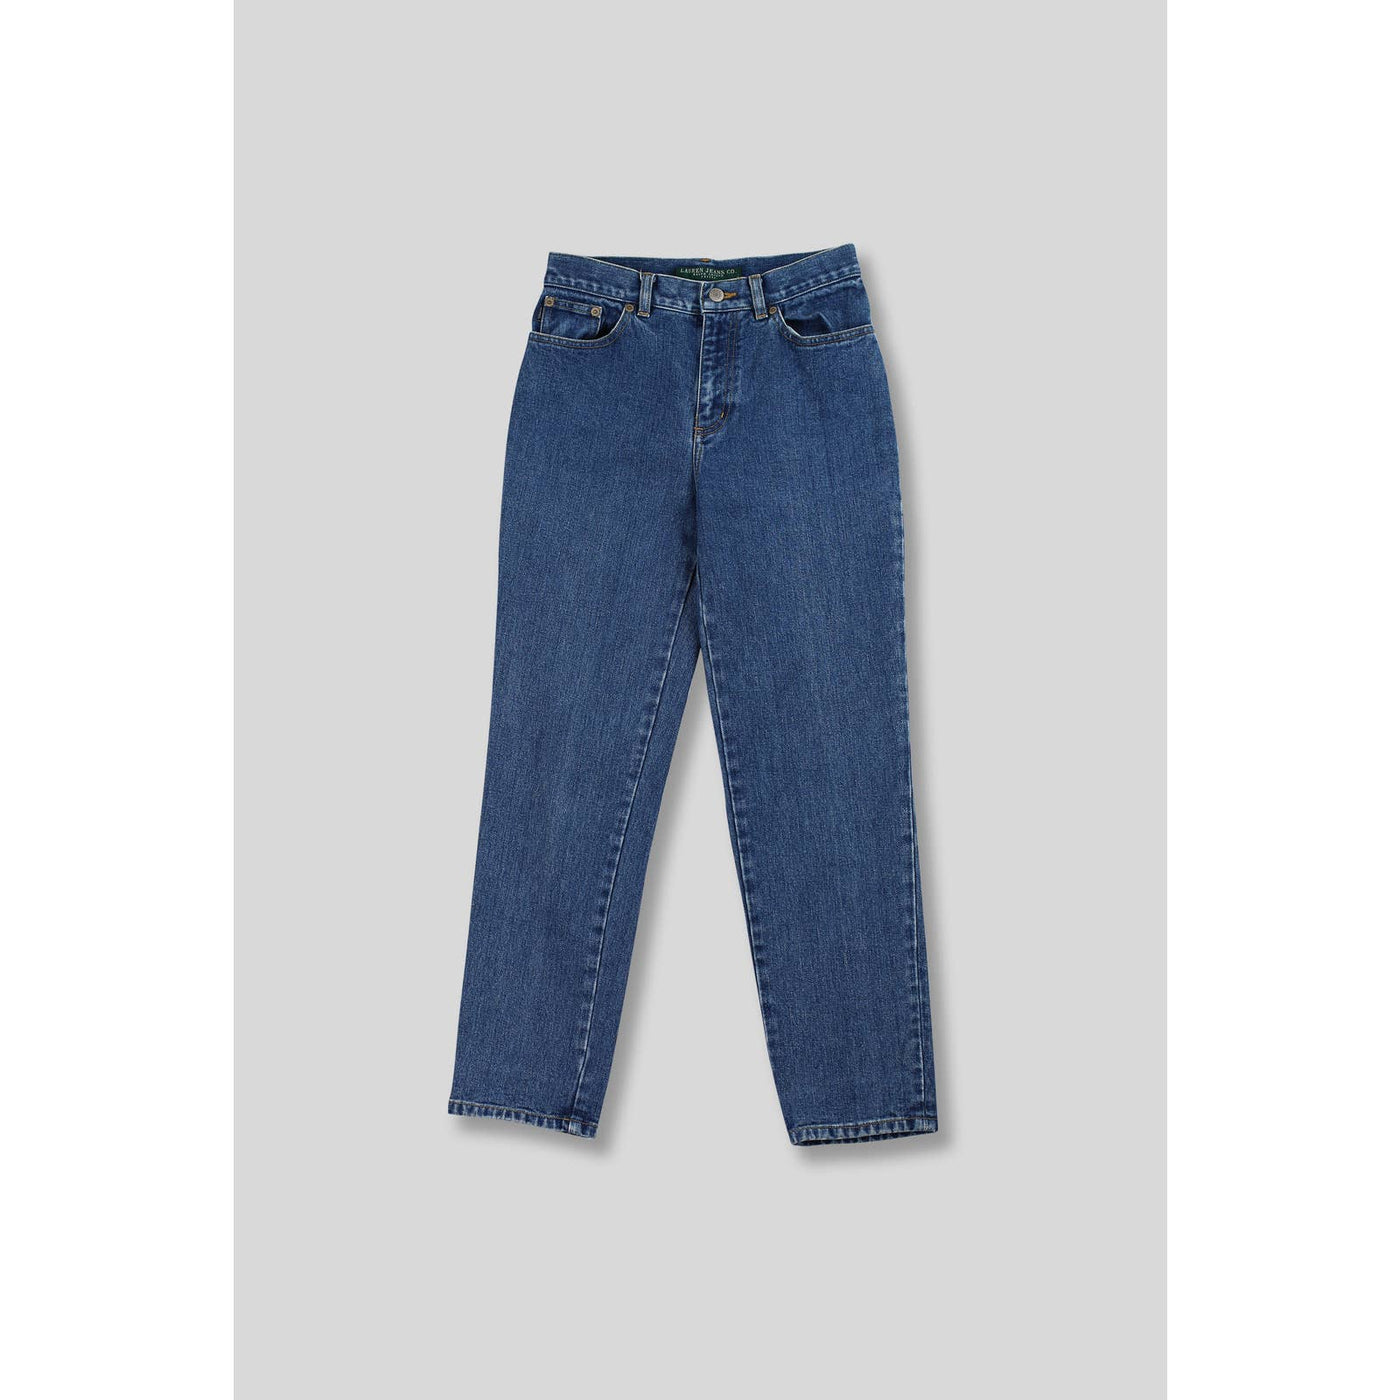 Vintage 90’s Ralph Lauren Medium Wash Jeans